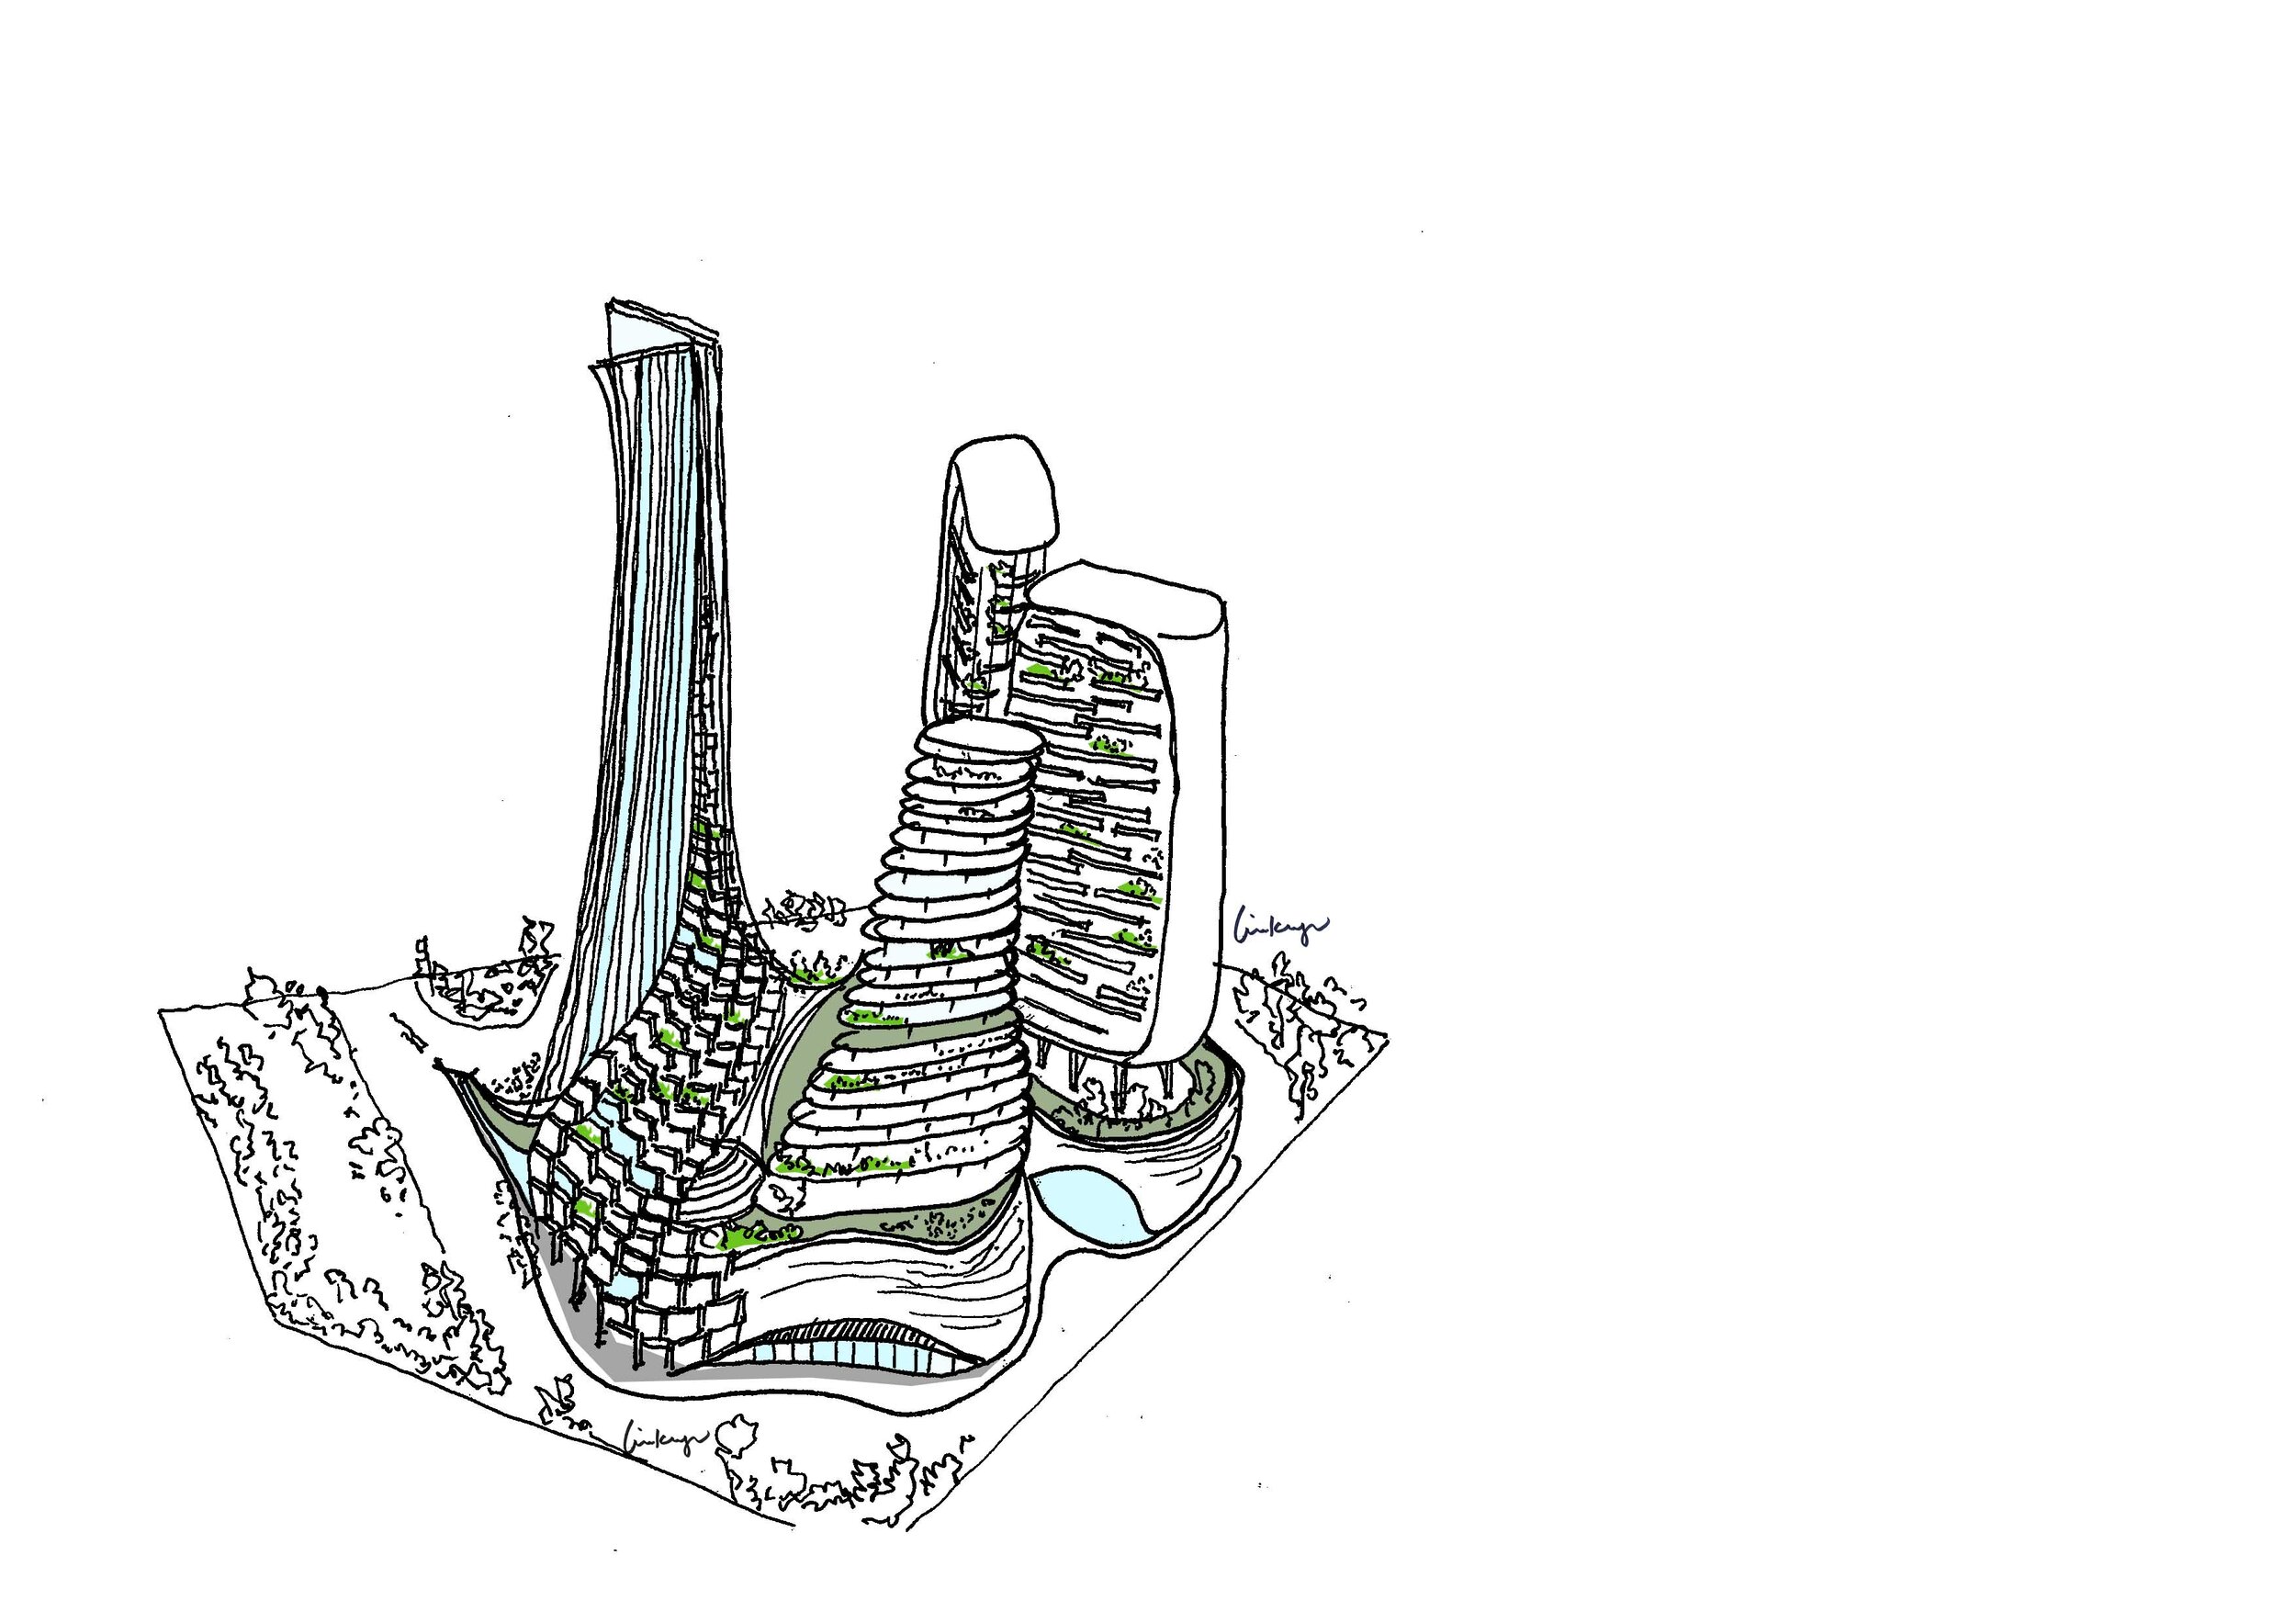 Visualizing an Urban Master Plan with SketchUp  Jim Leggitt  Drawing  Shortcuts